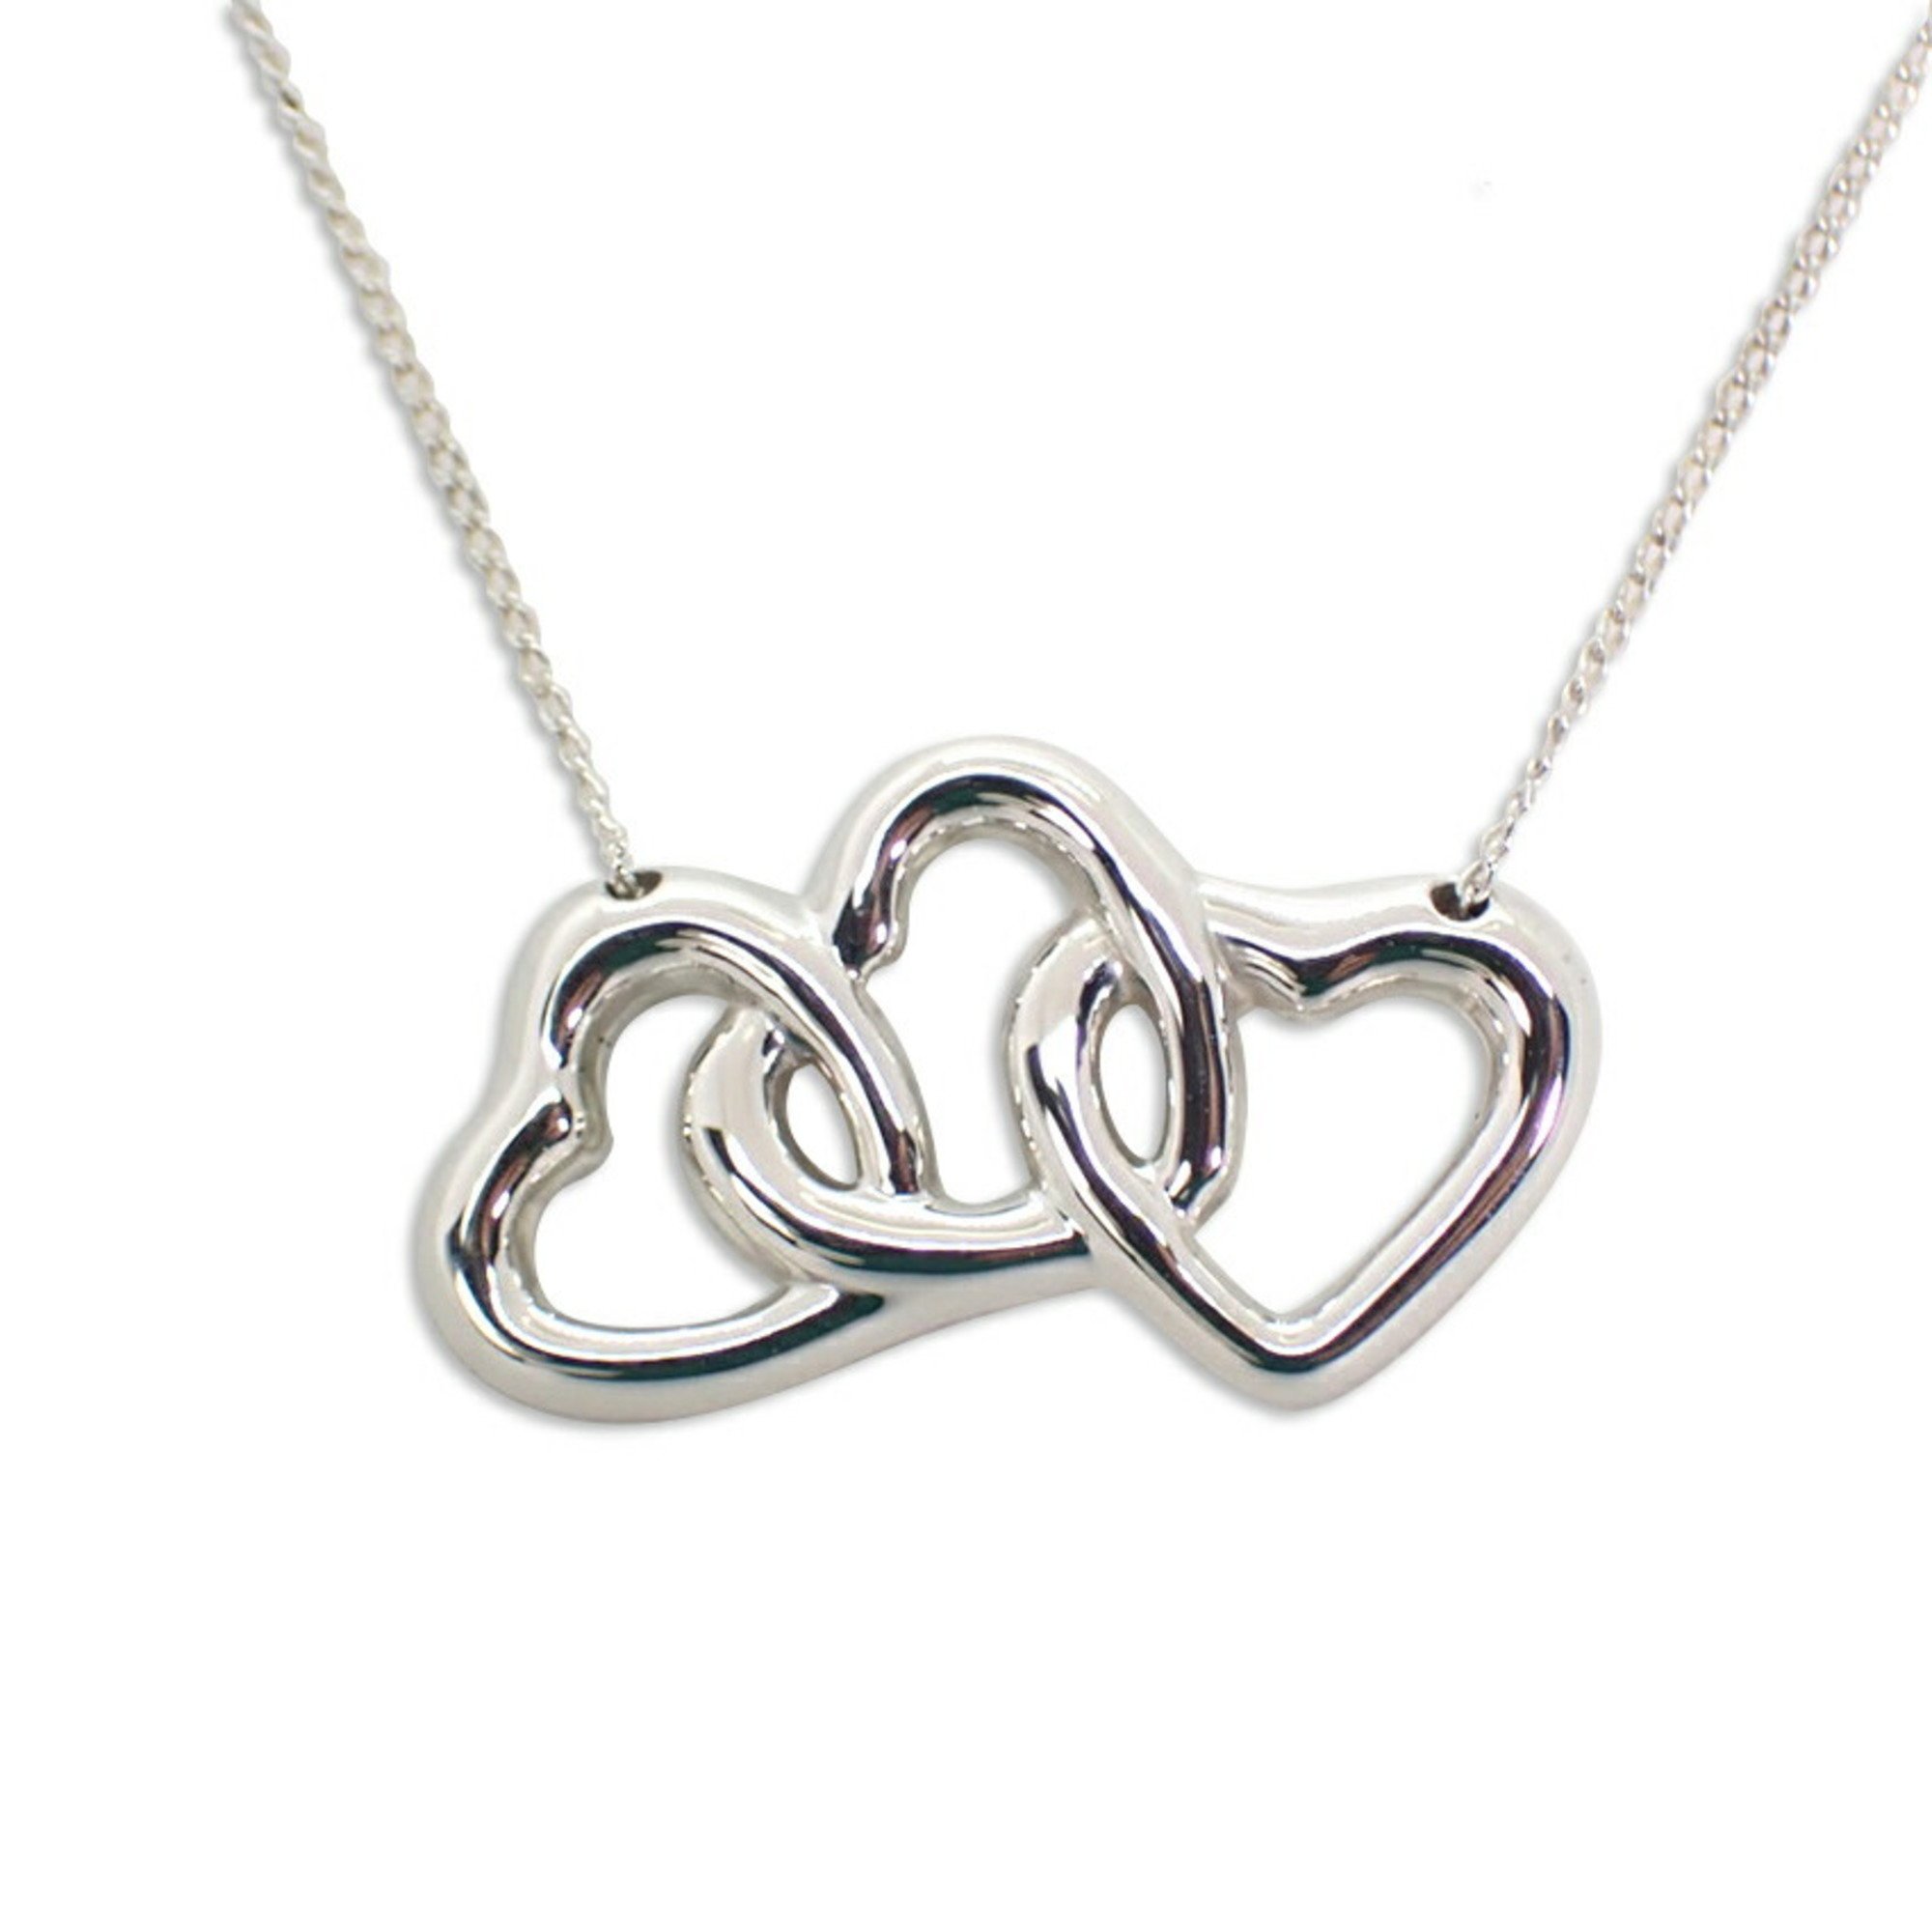 TIFFANY 925 Triple Heart Pendant Necklace